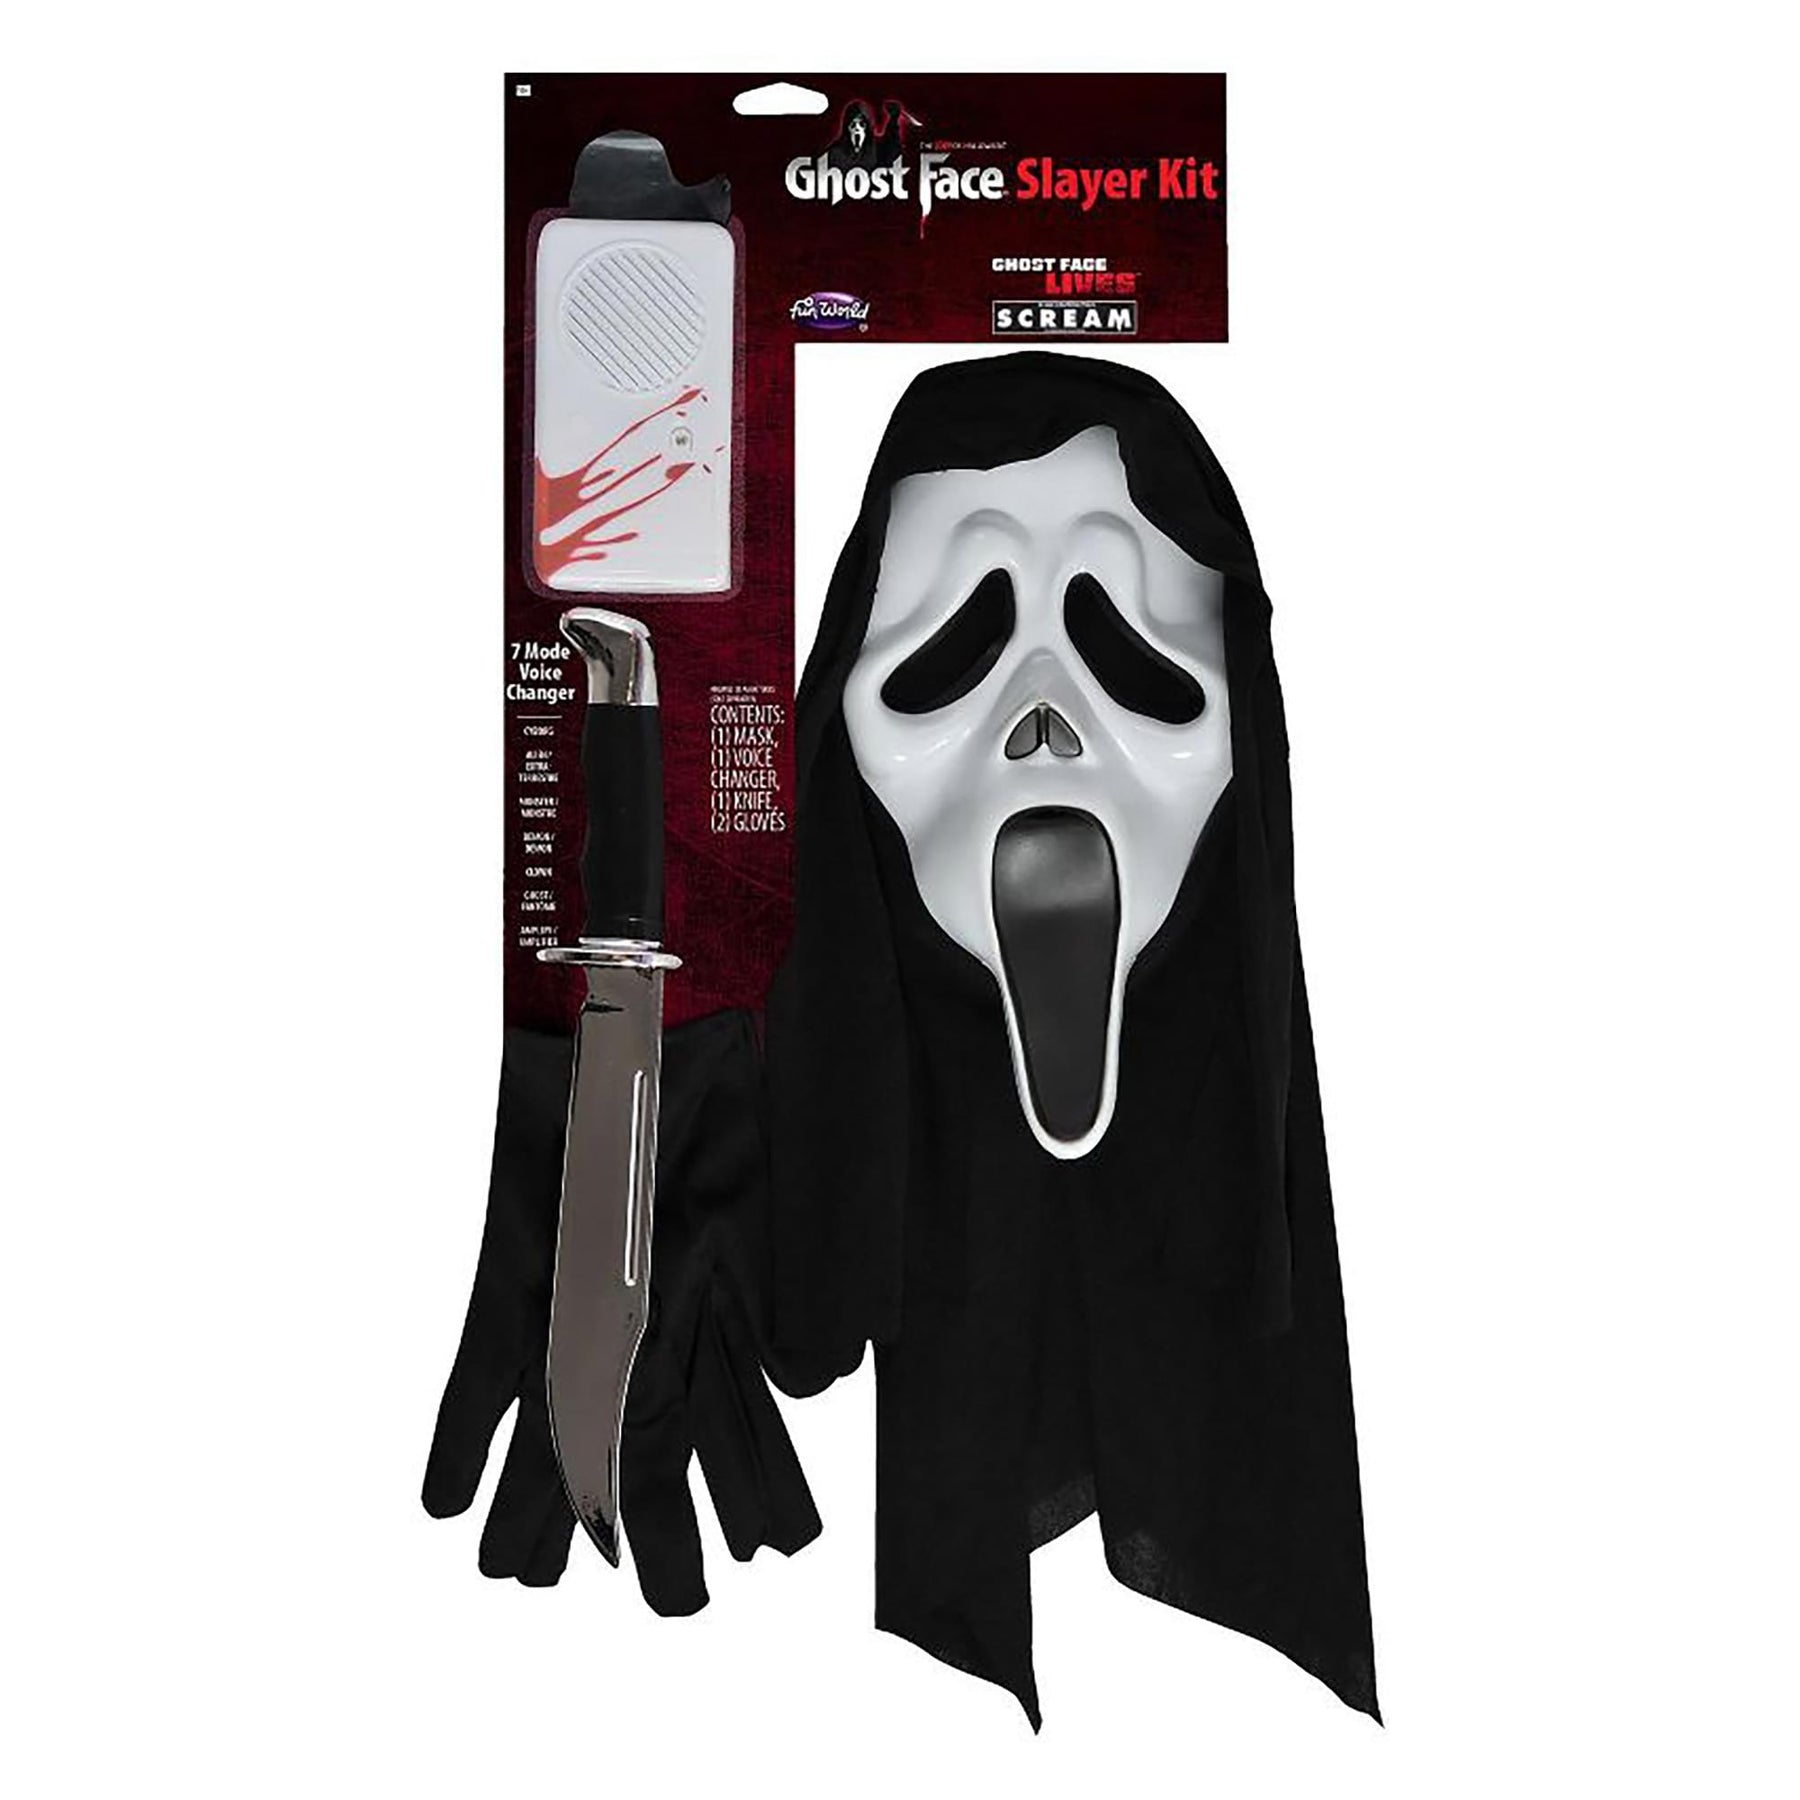 Scream Ghost Face Slayer Kit w/ Voice Changer